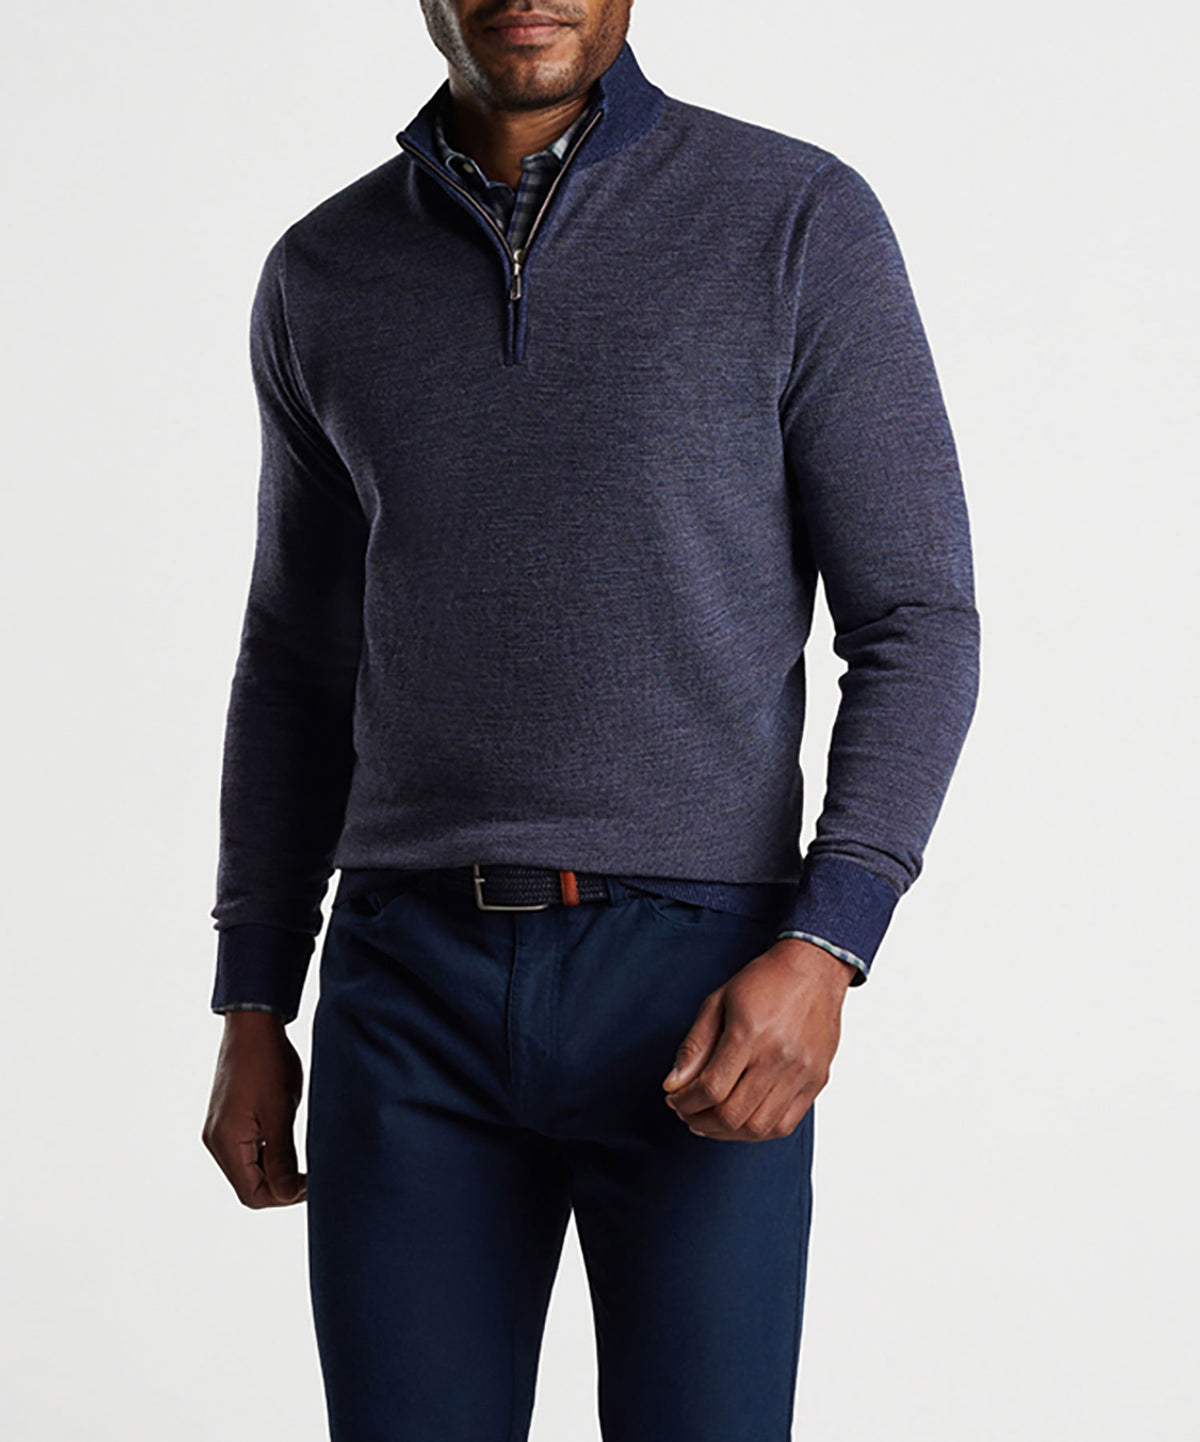 Peter Millar Breaker Birdseye Quarter-Zip Sweater, Big & Tall